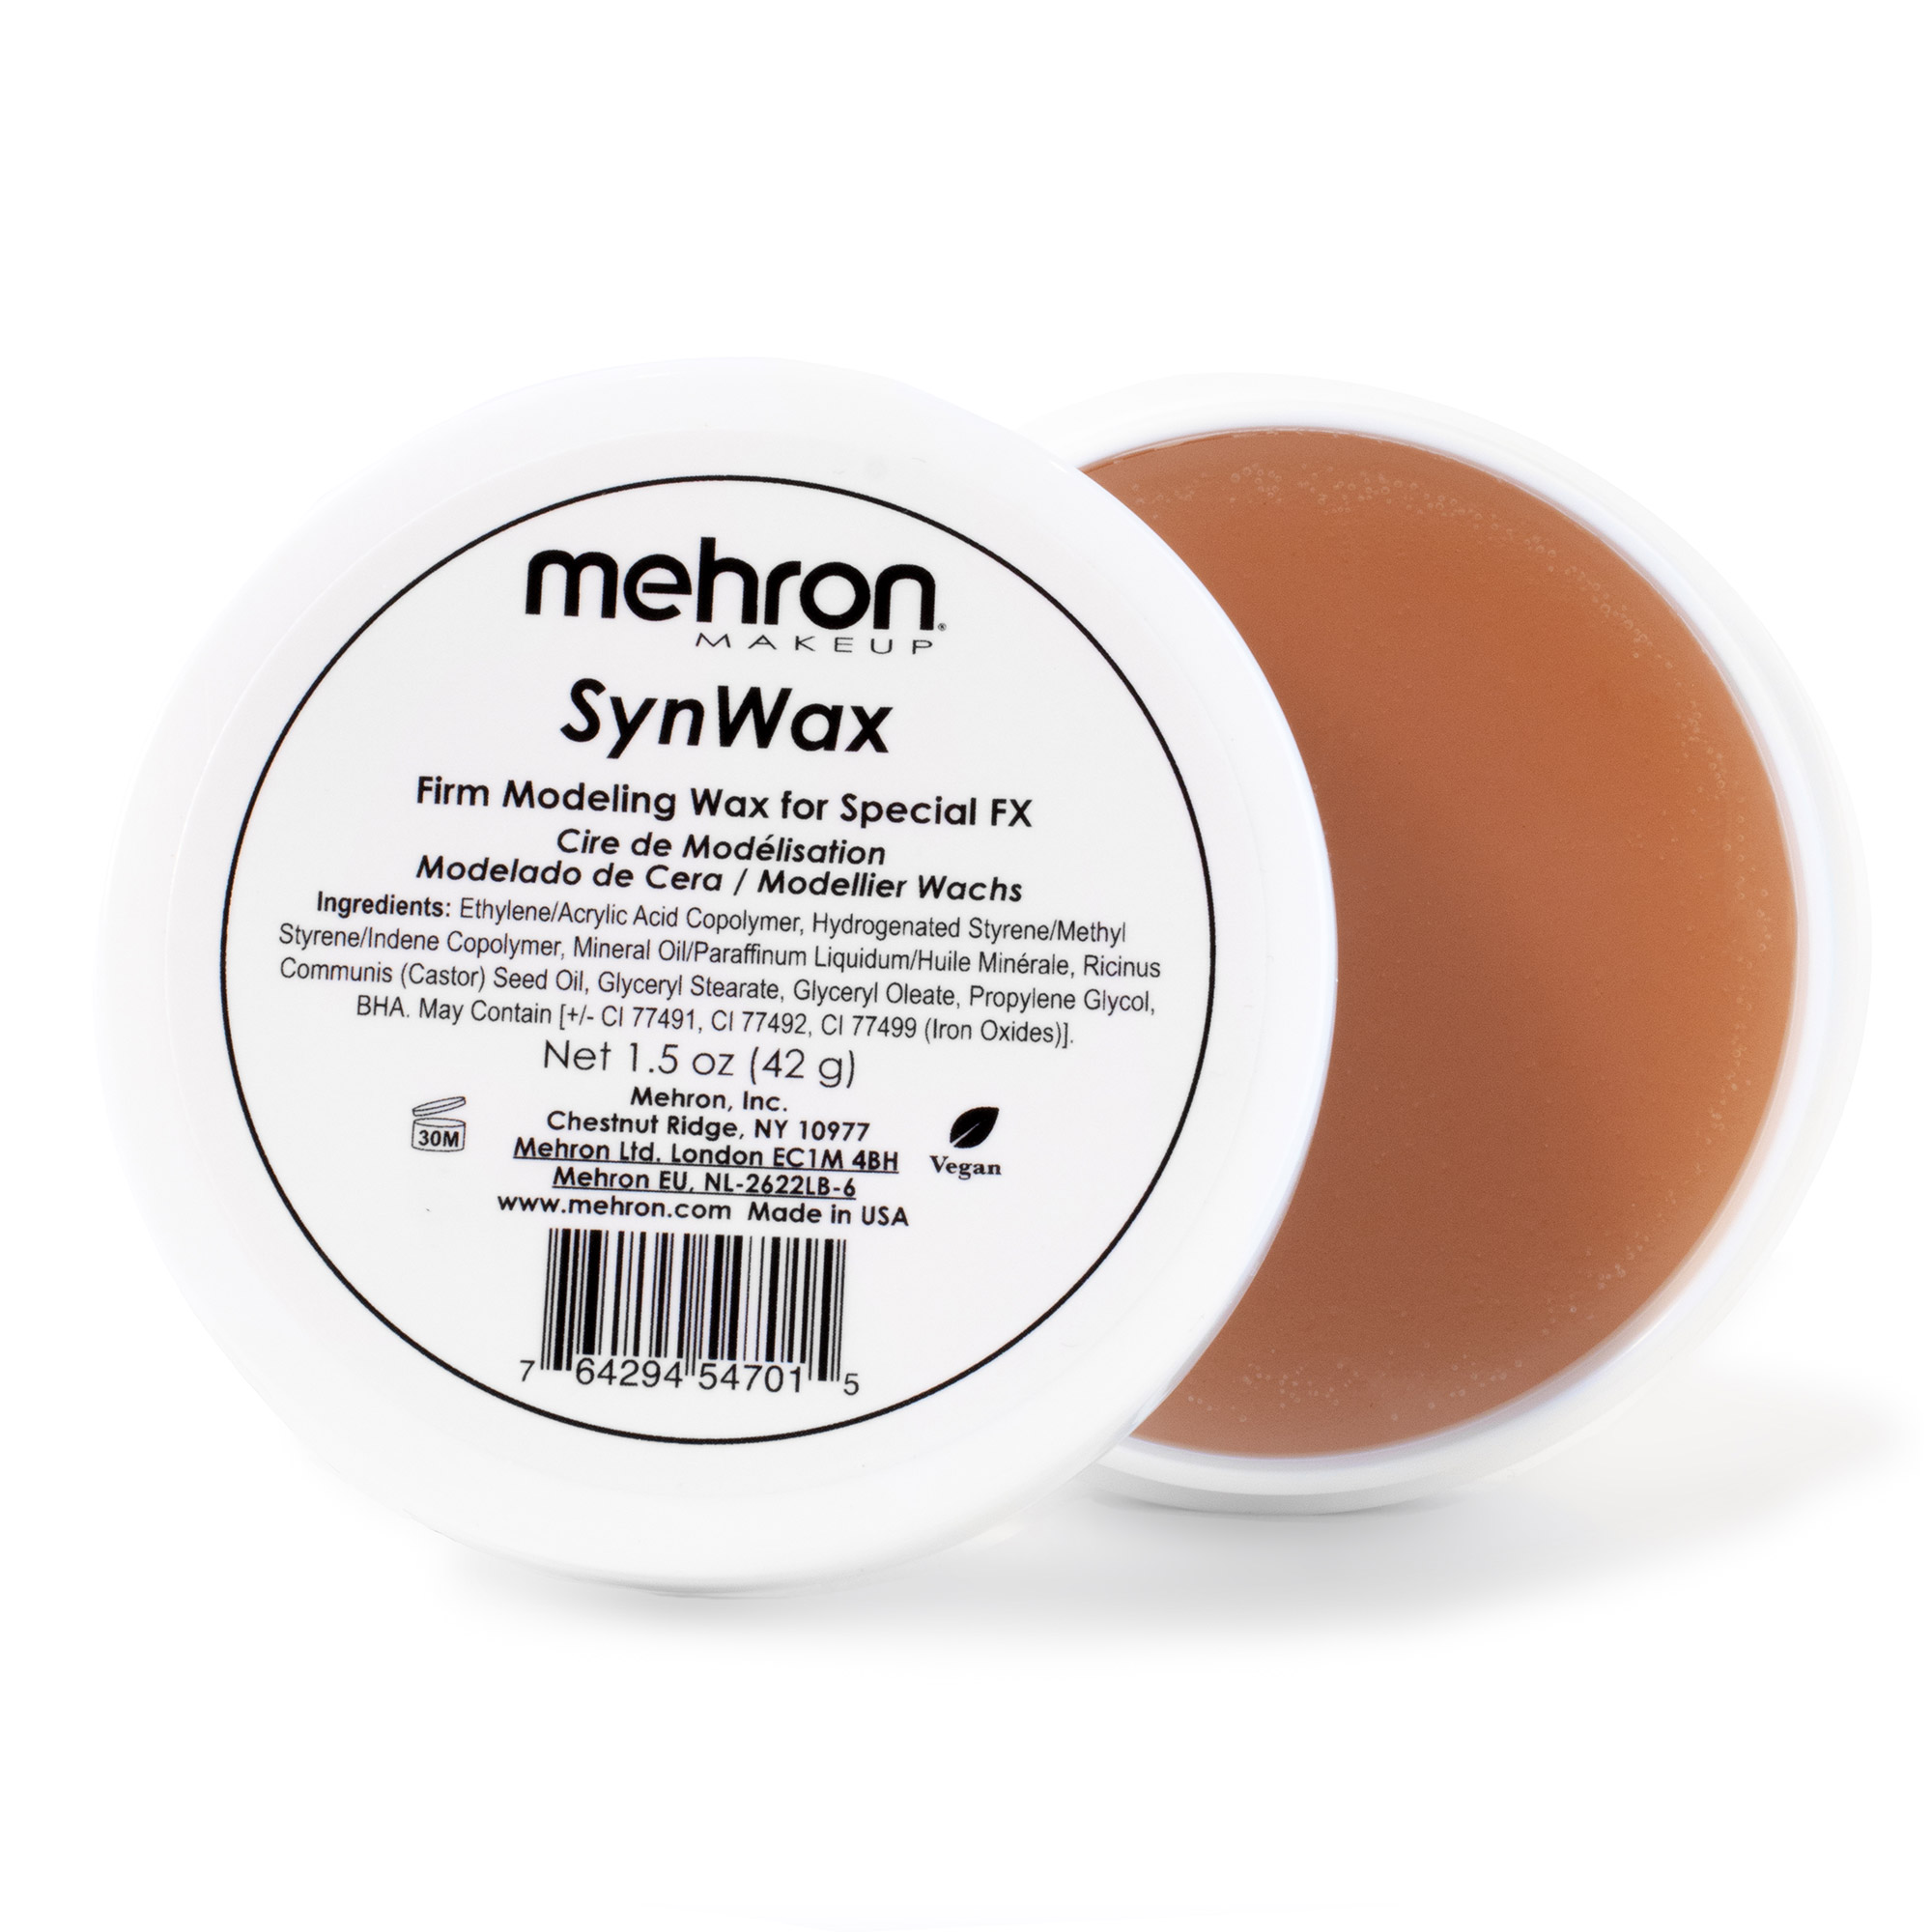 Mehron Makeup Spirit Gum (1 oz) 